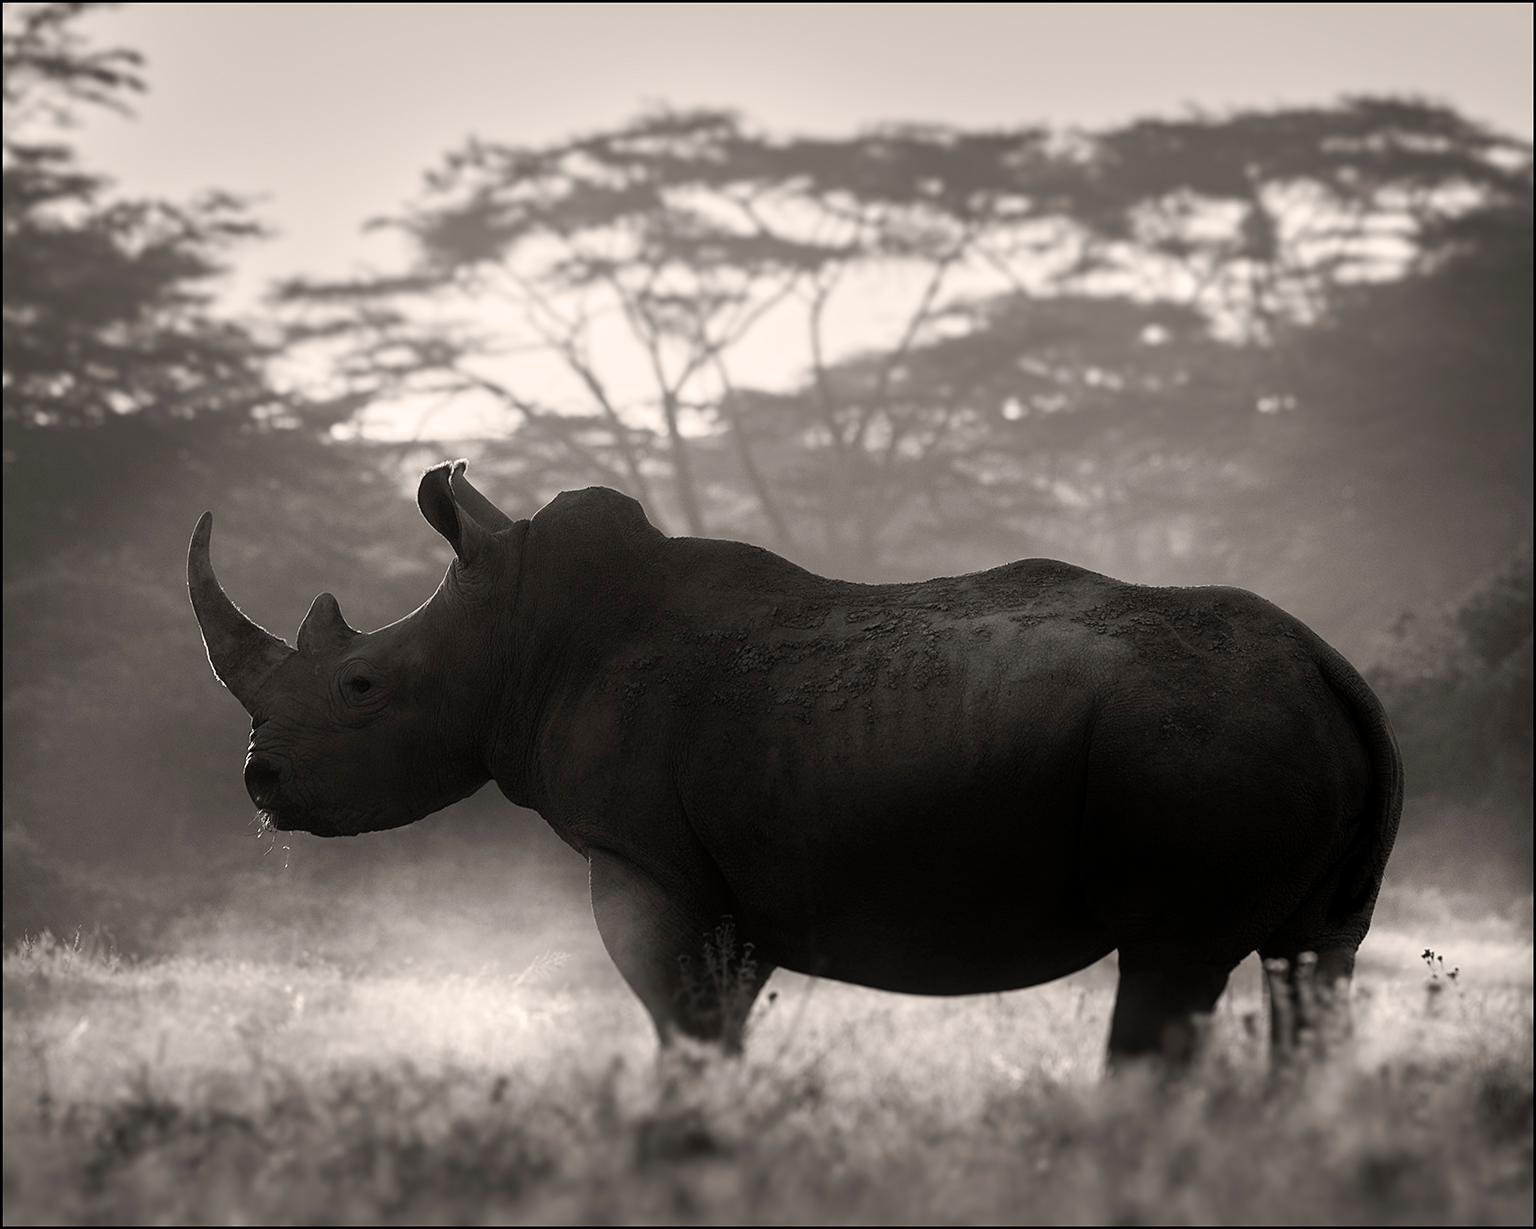 Black and White Photograph Joachim Schmeisser - Cut in Stone, Rhino, noir et blanc, animal, Afrique, photographie